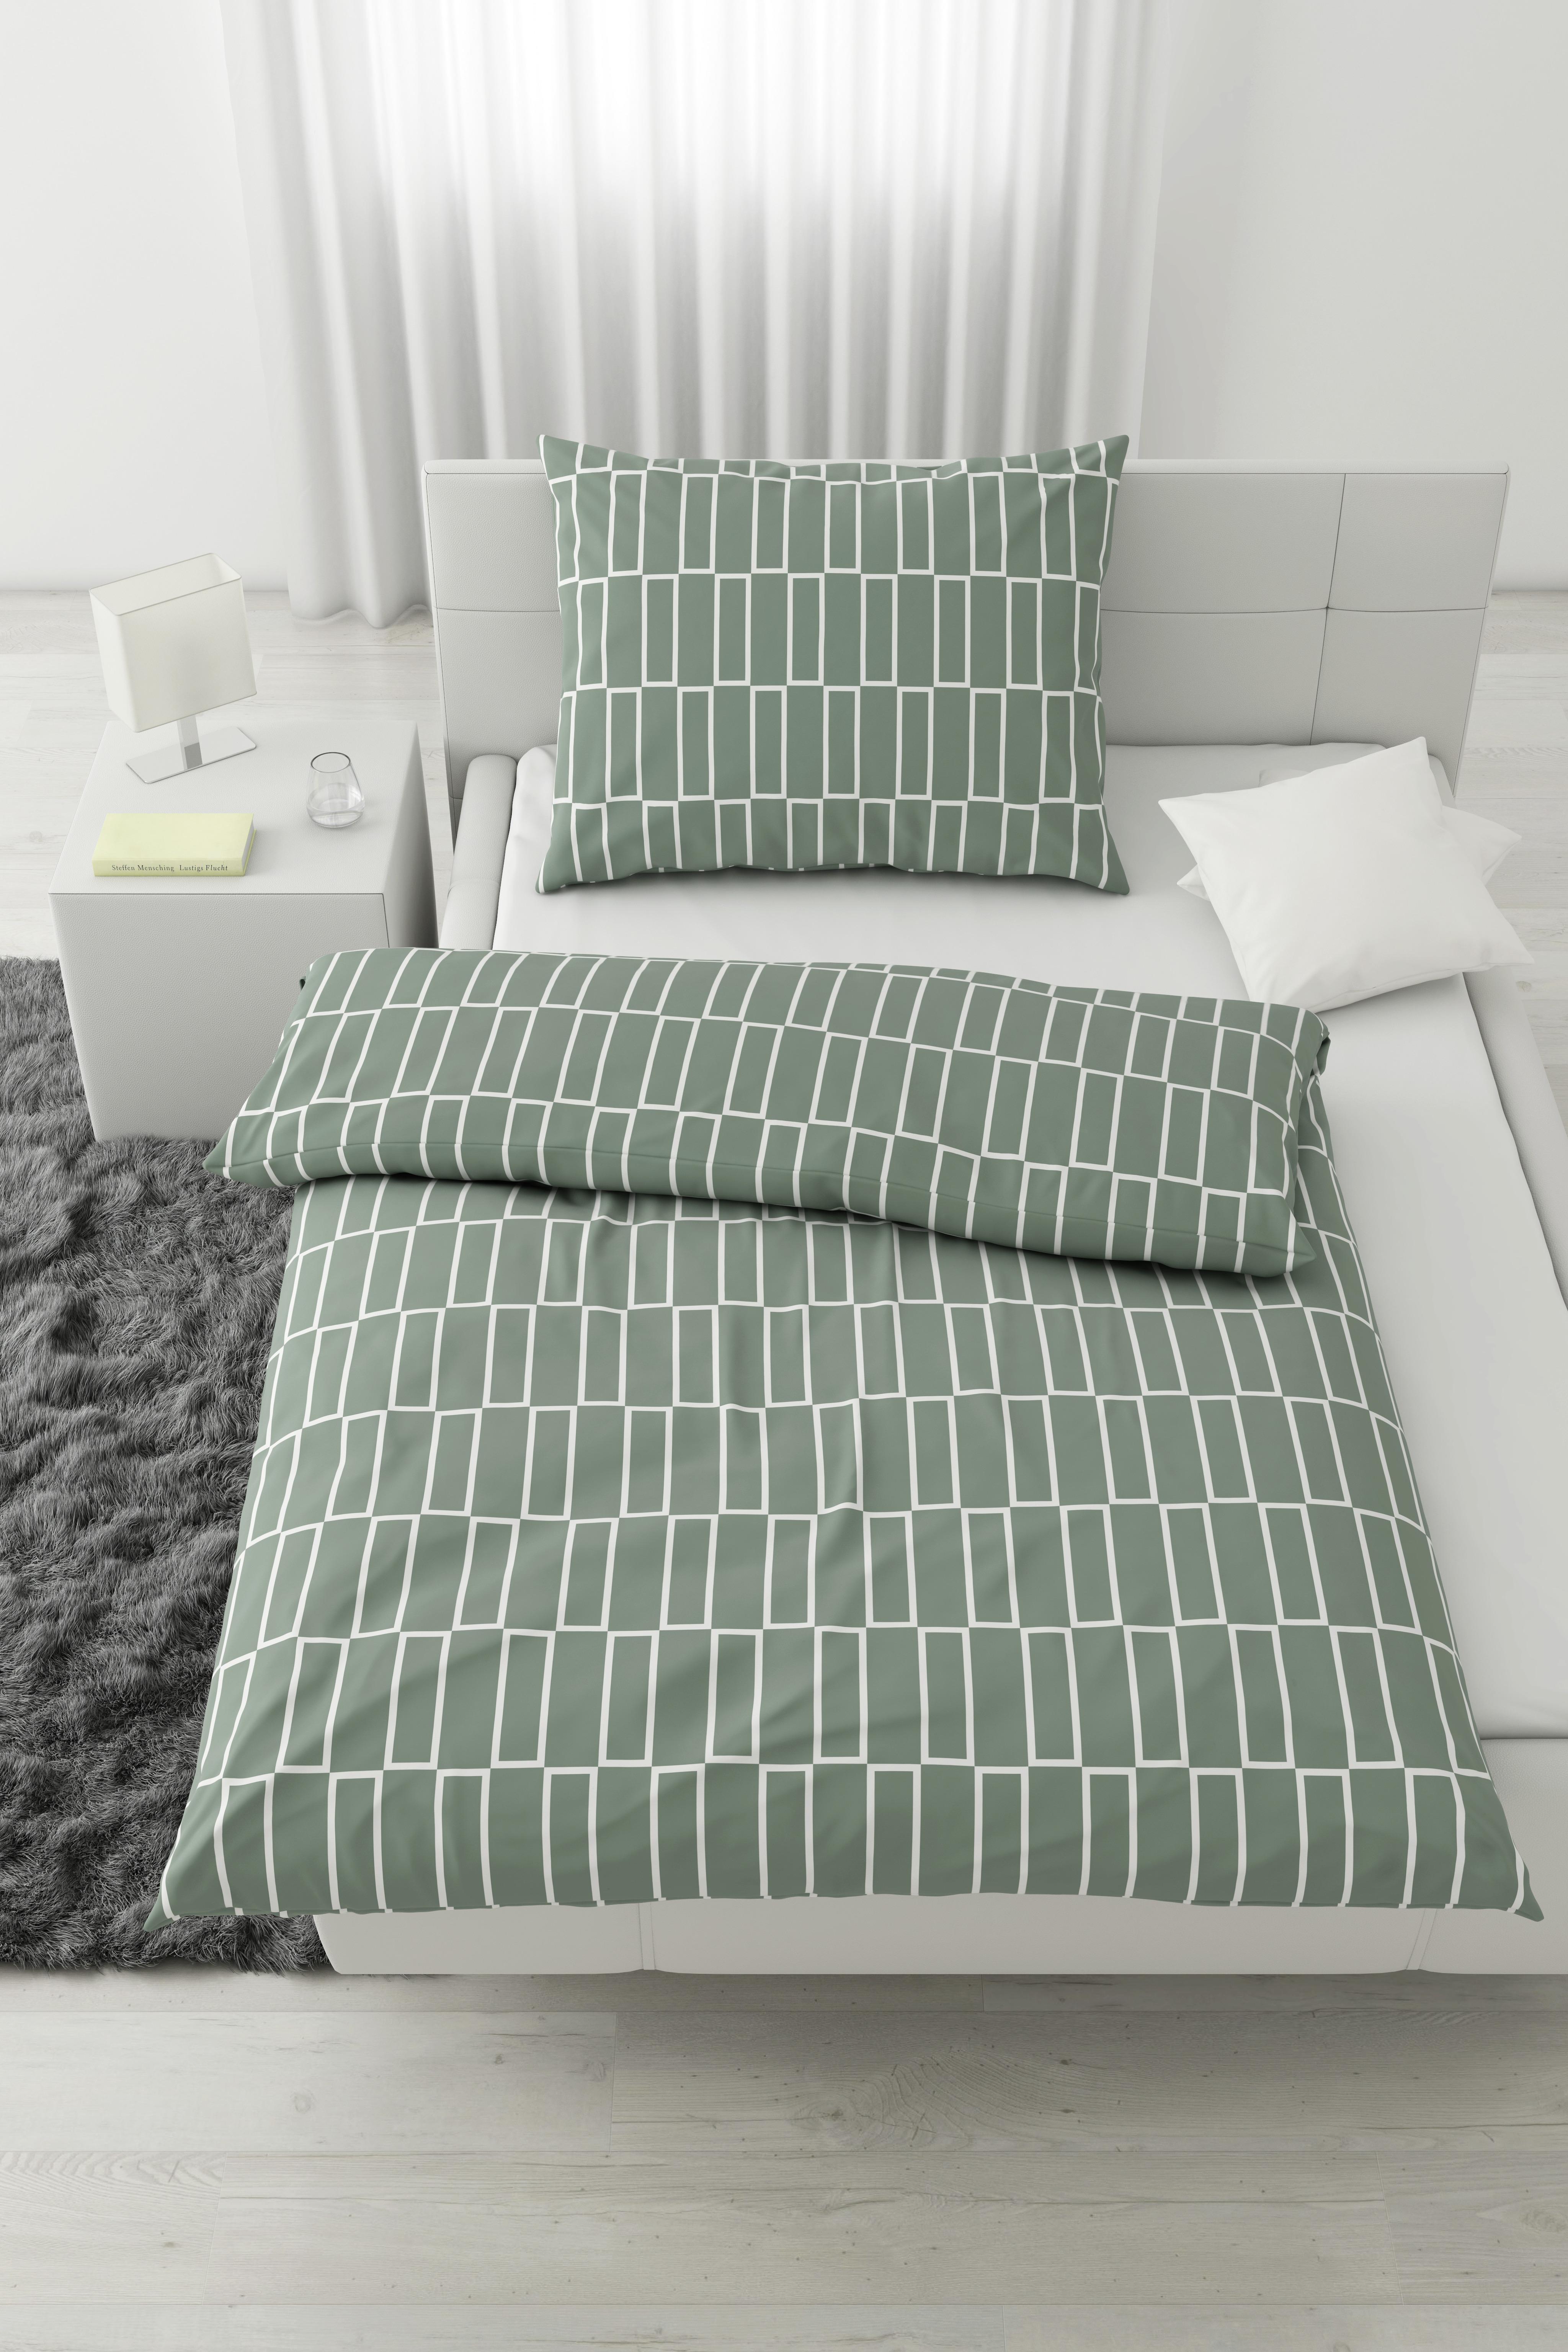 Lenjerie de pat Brigg - verde deschis/taupe, textil (140/200cm) - Modern Living